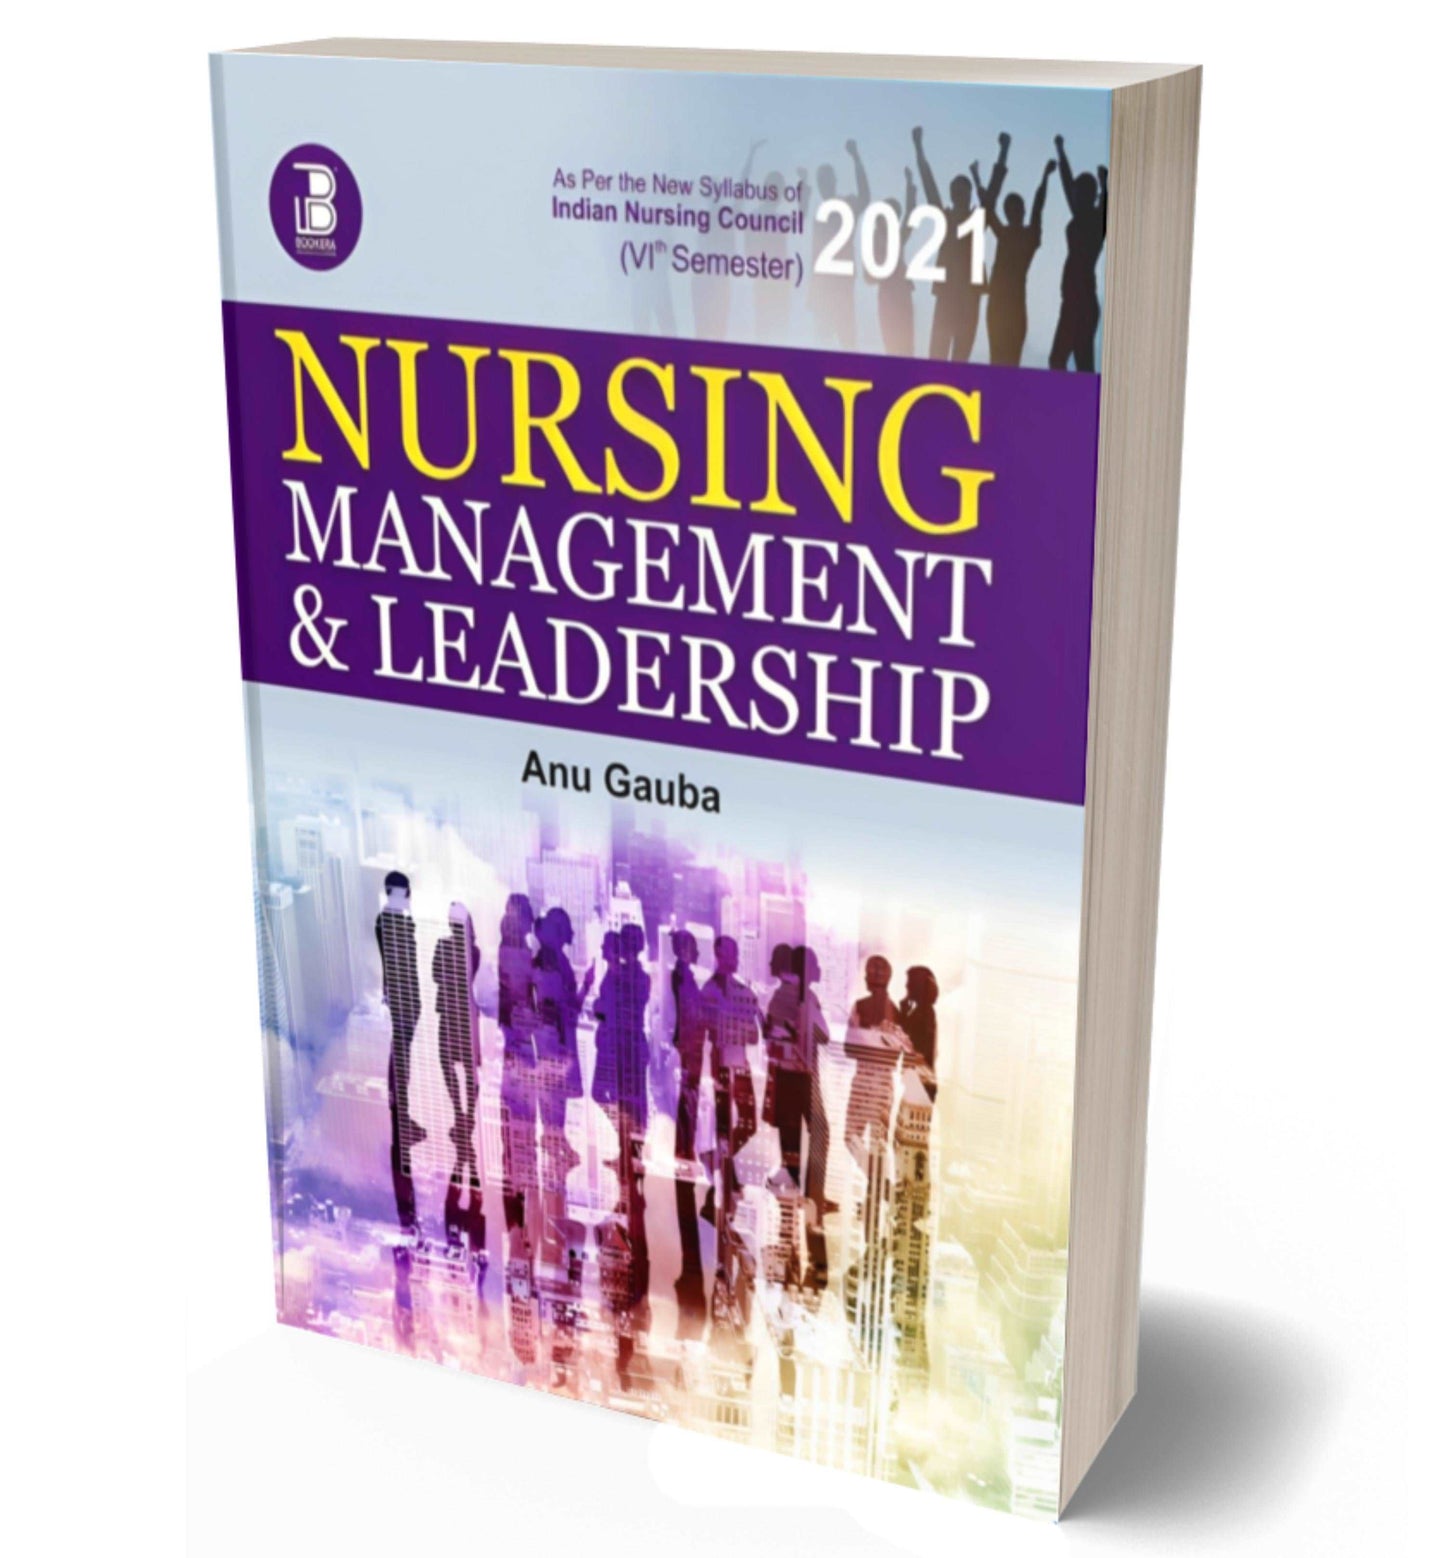 Nursing Management & Leadership